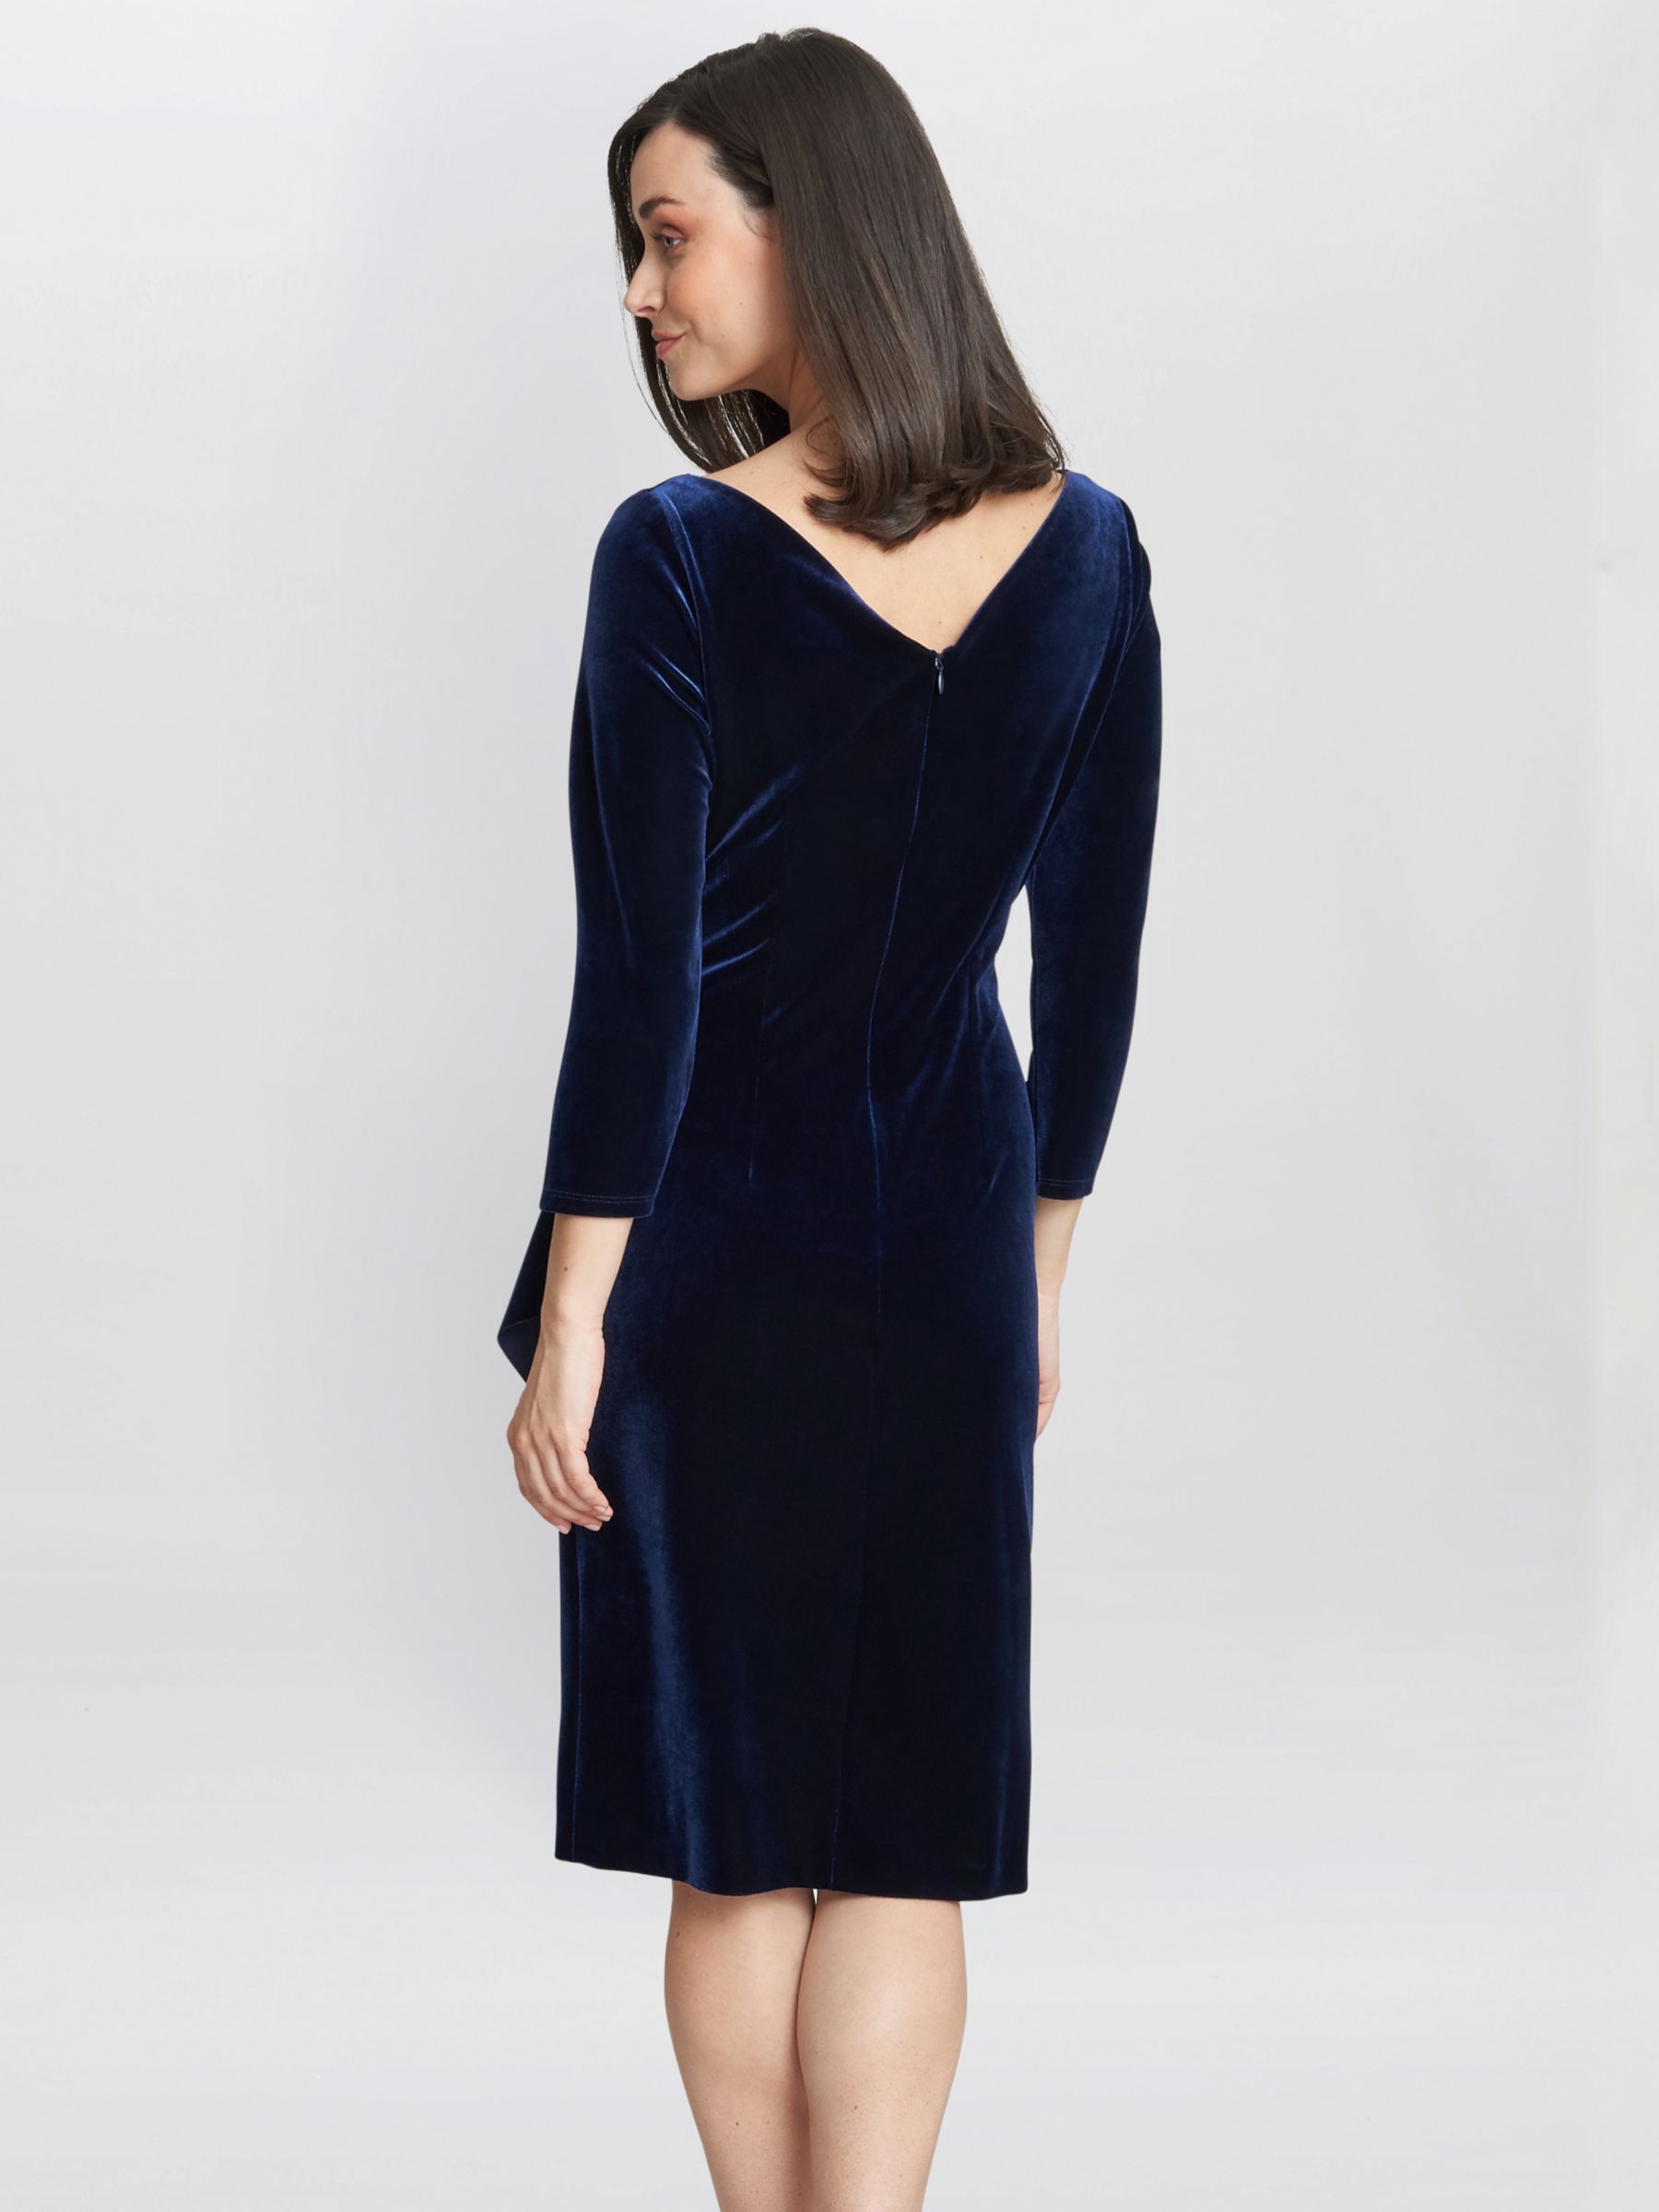 Gina Bacconi Zoe Velvet Wrap Dress, Navy at John Lewis & Partners